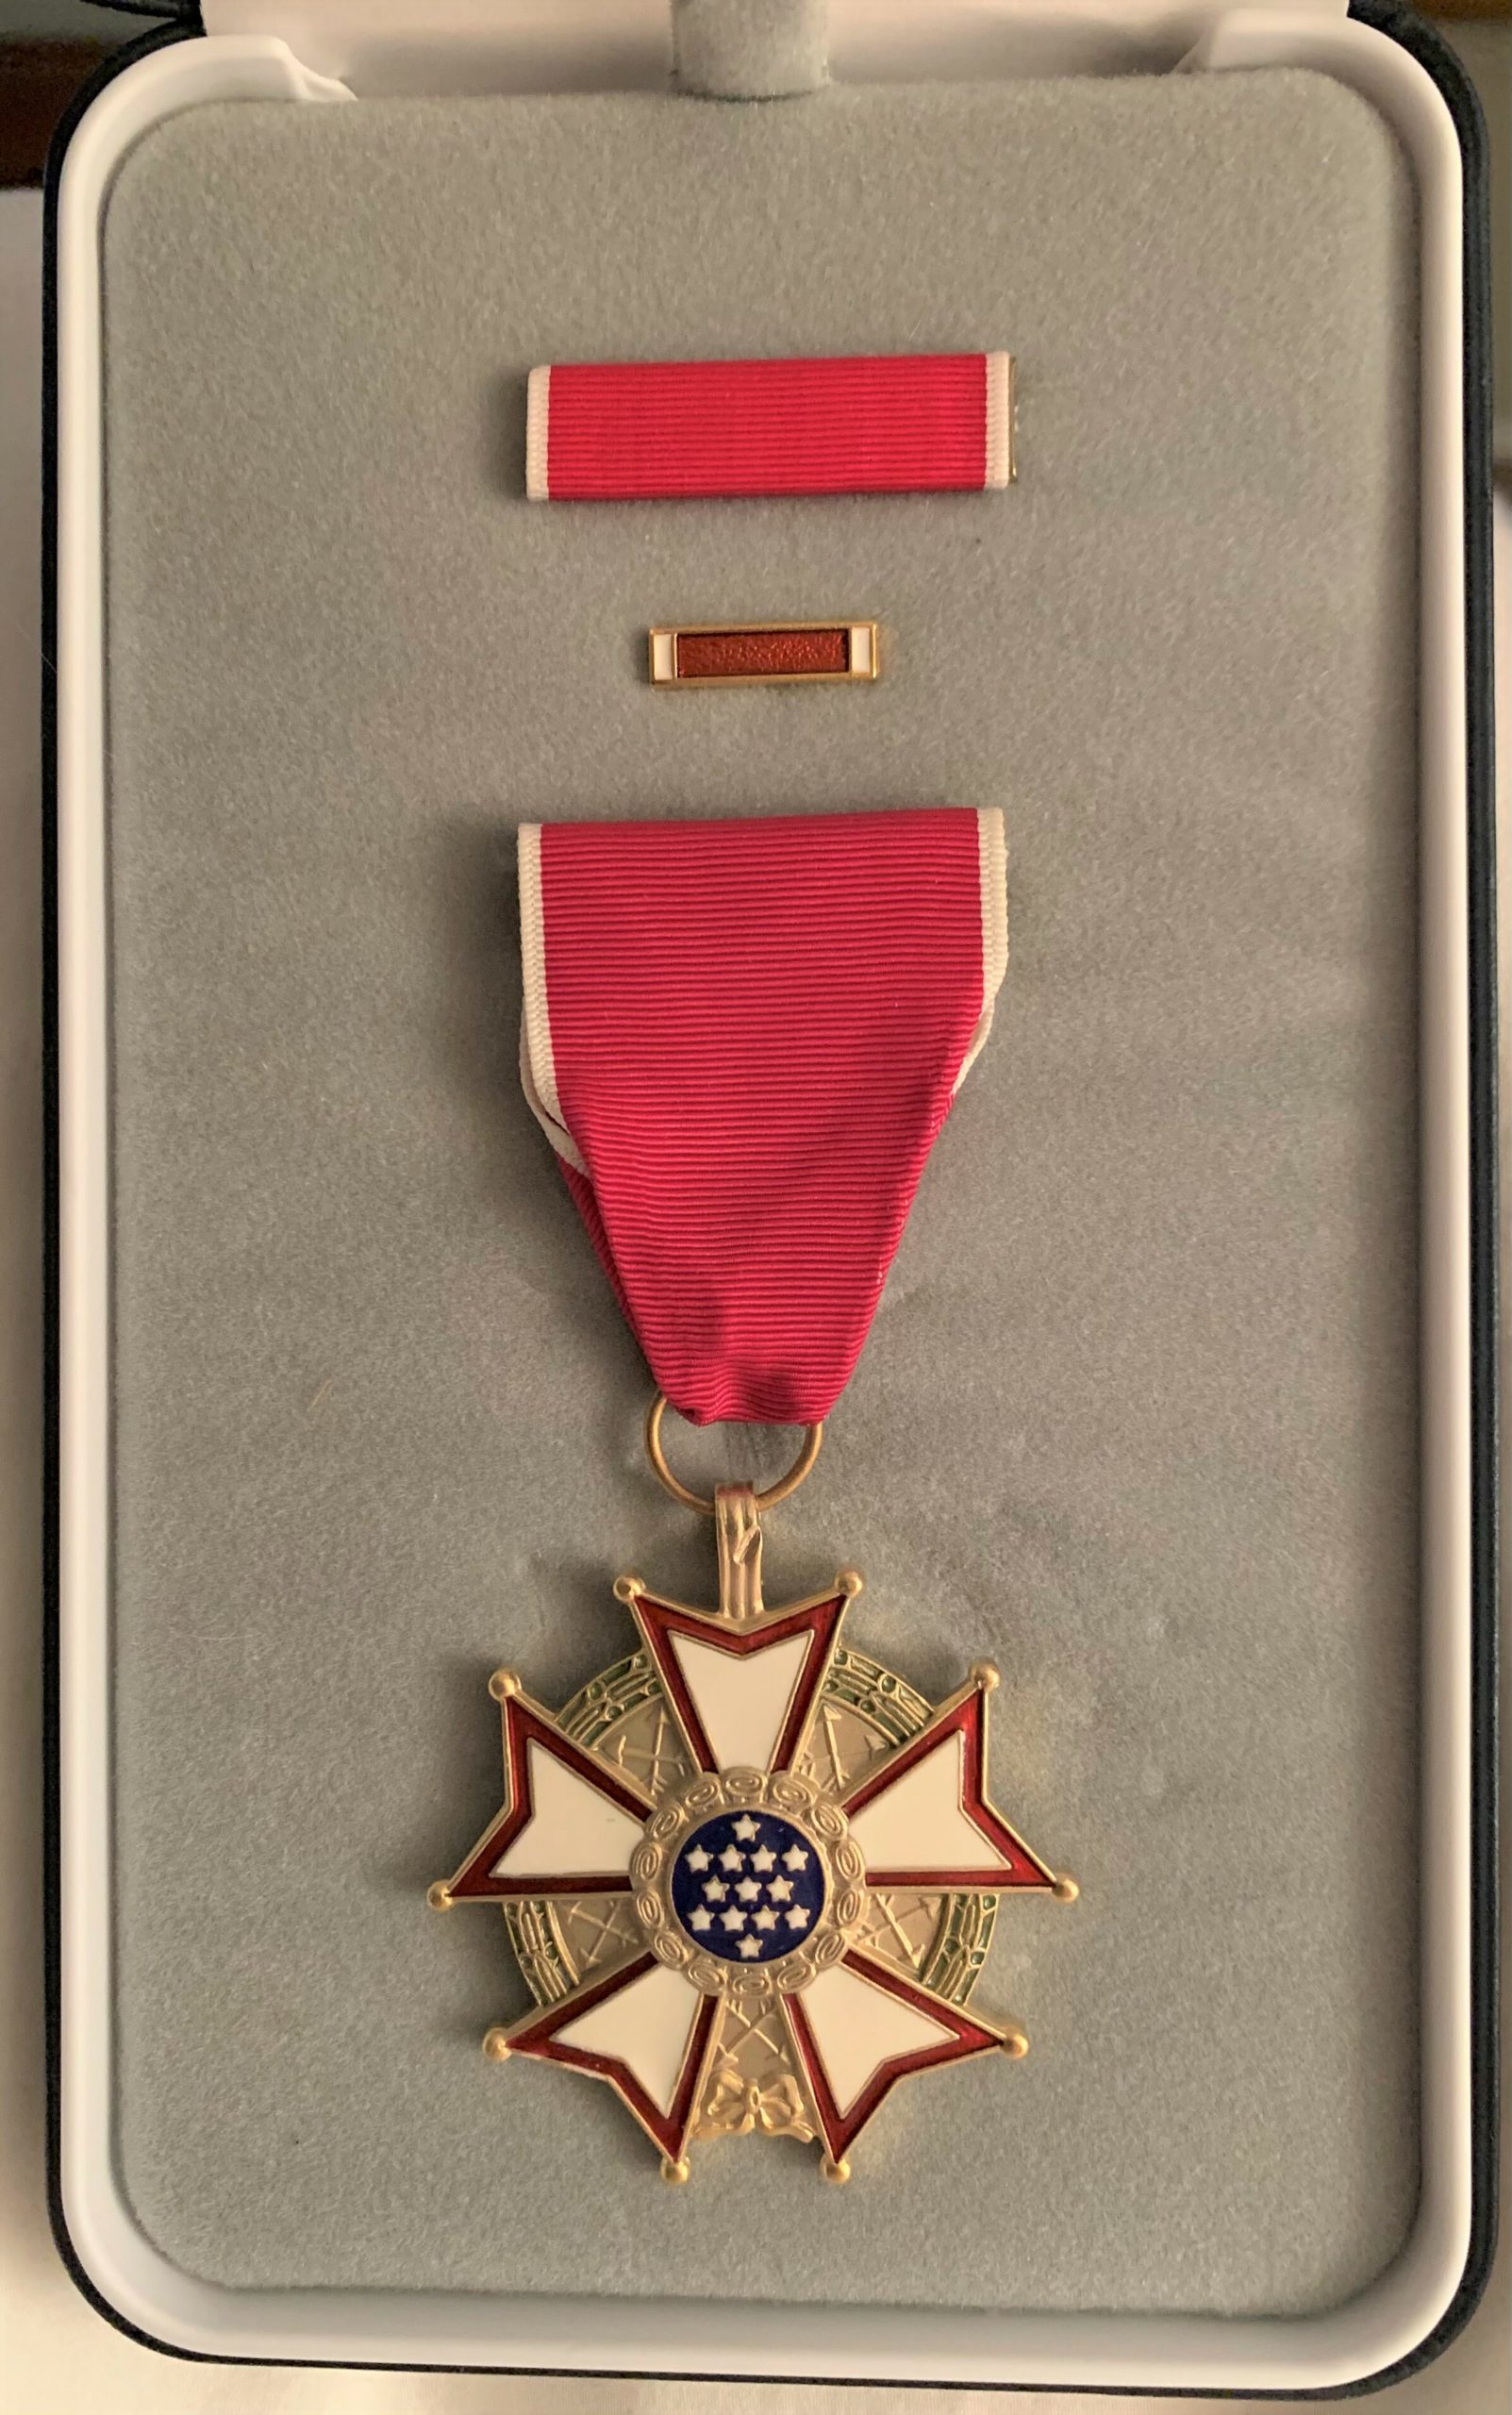 The Legion of Merit medal